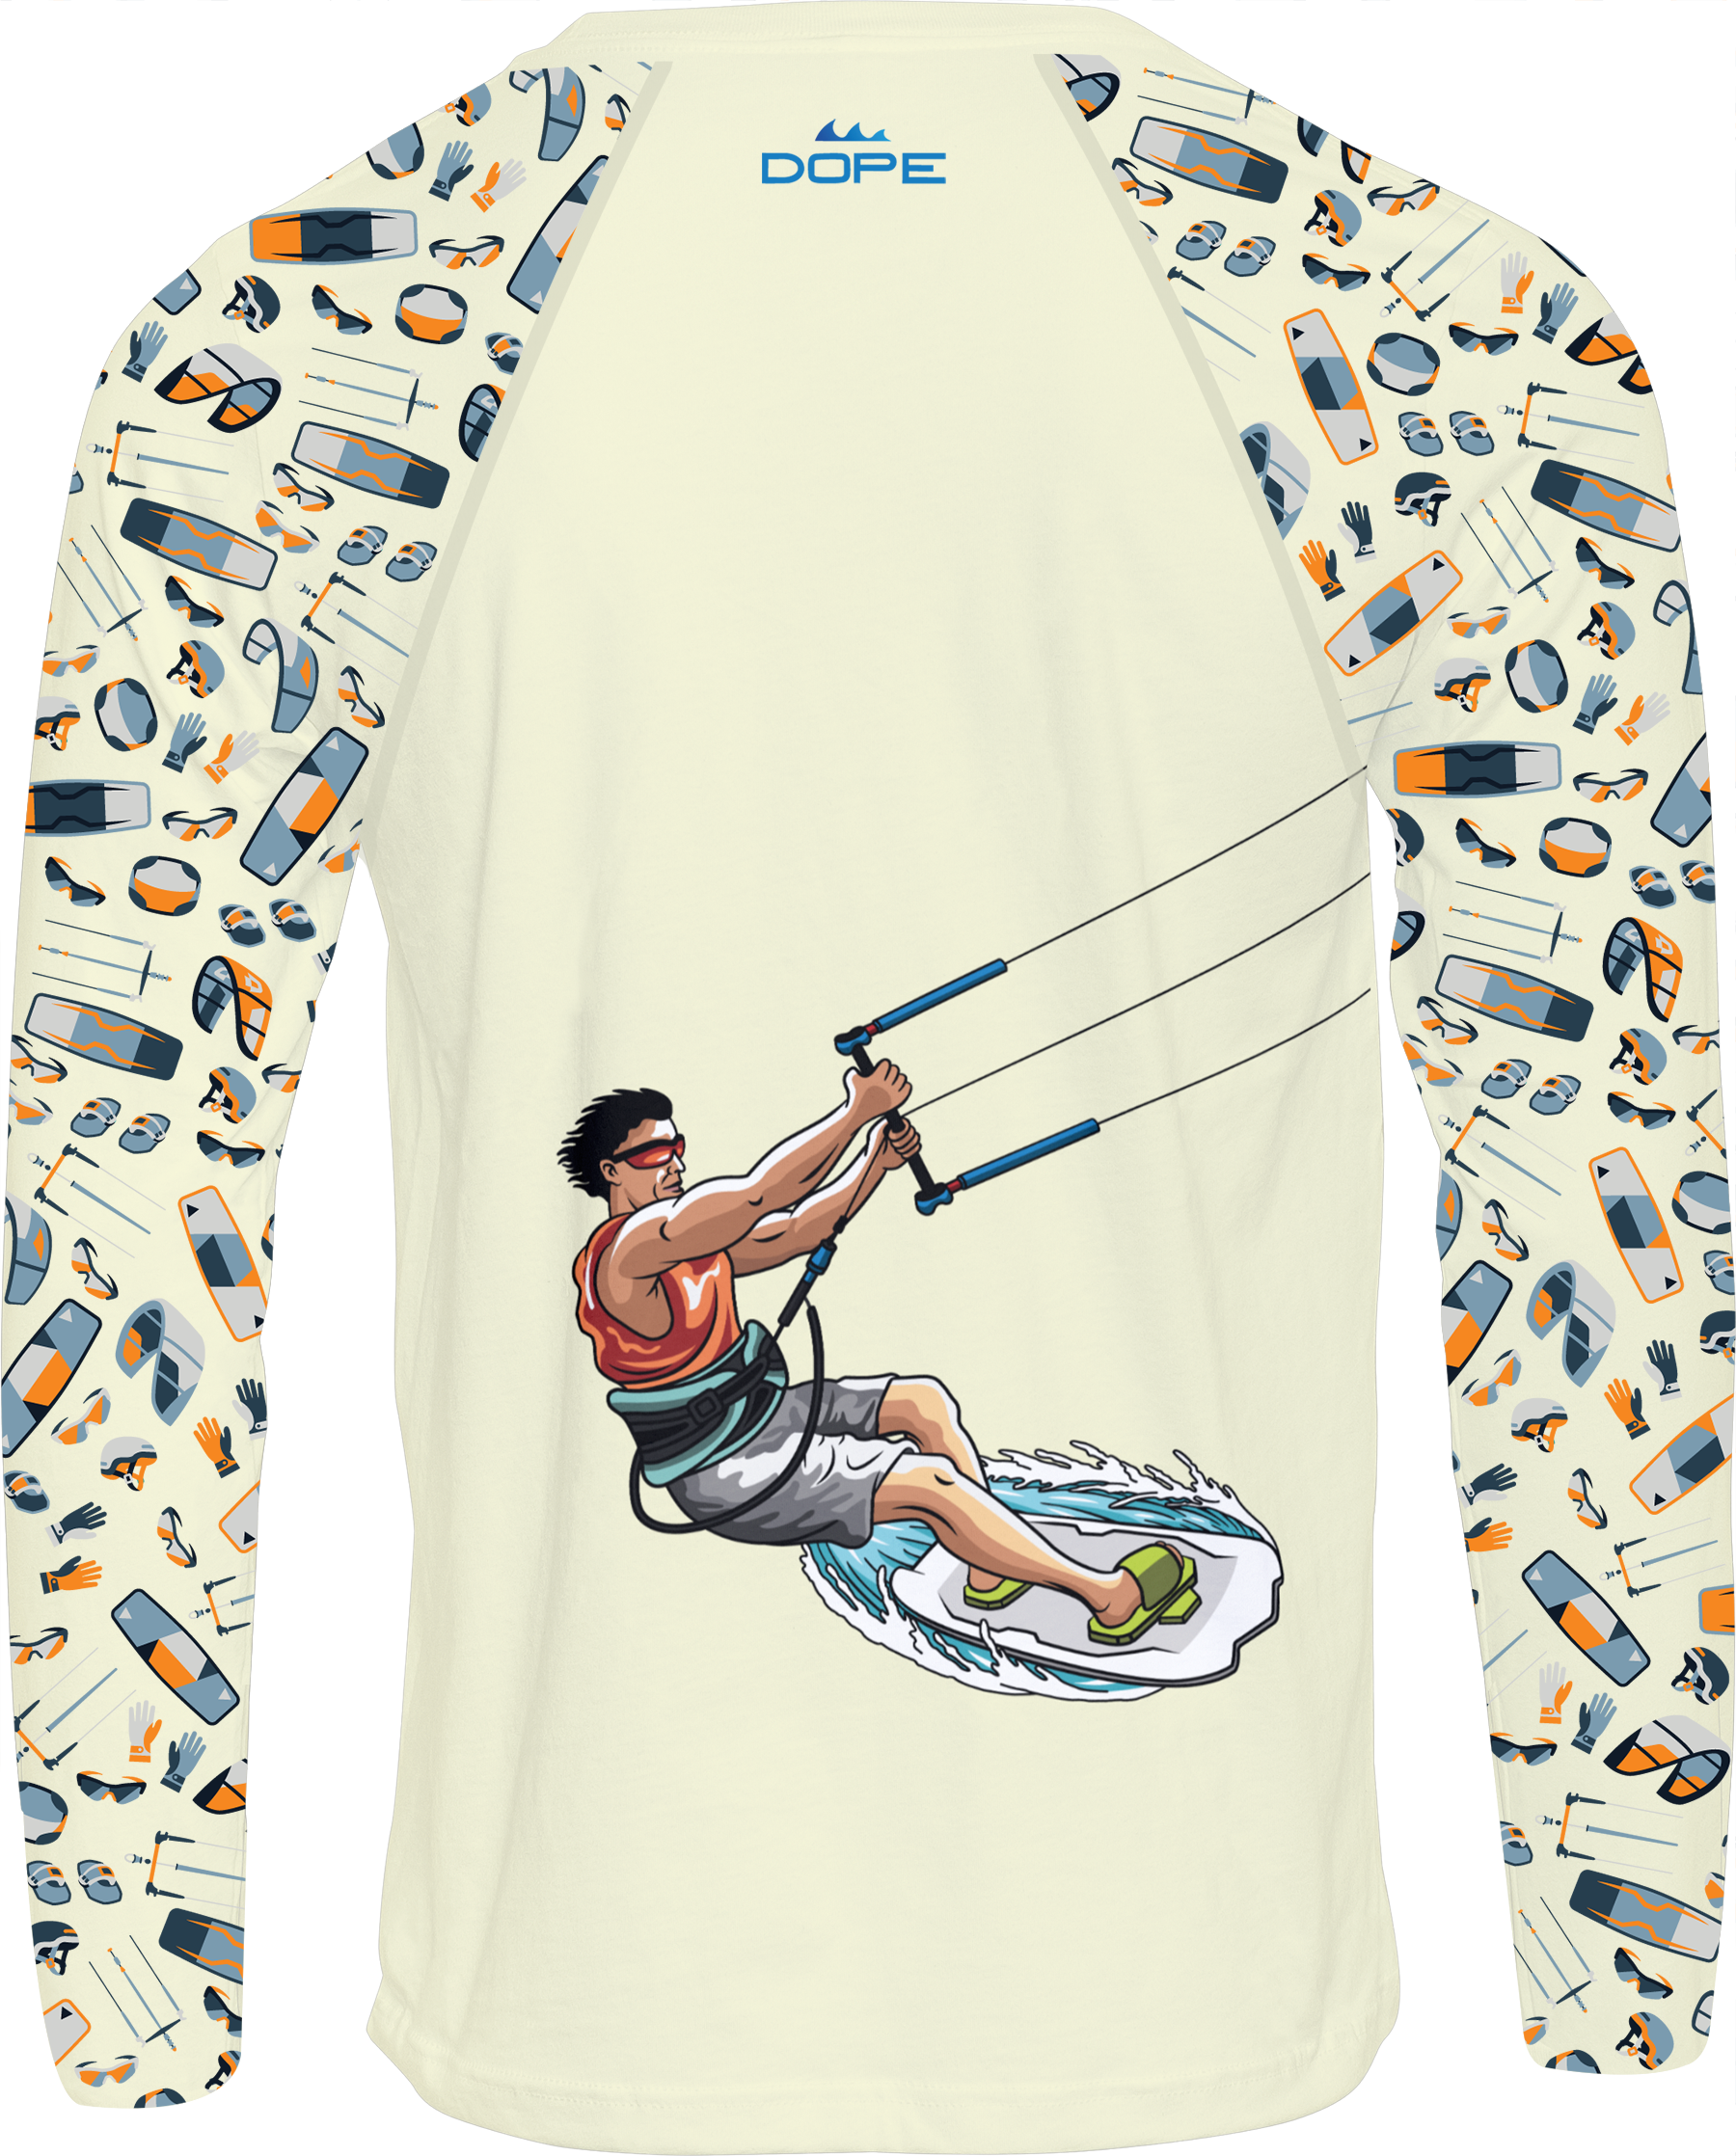 Kitesurfing - Long Sleeve Performance T-shirt